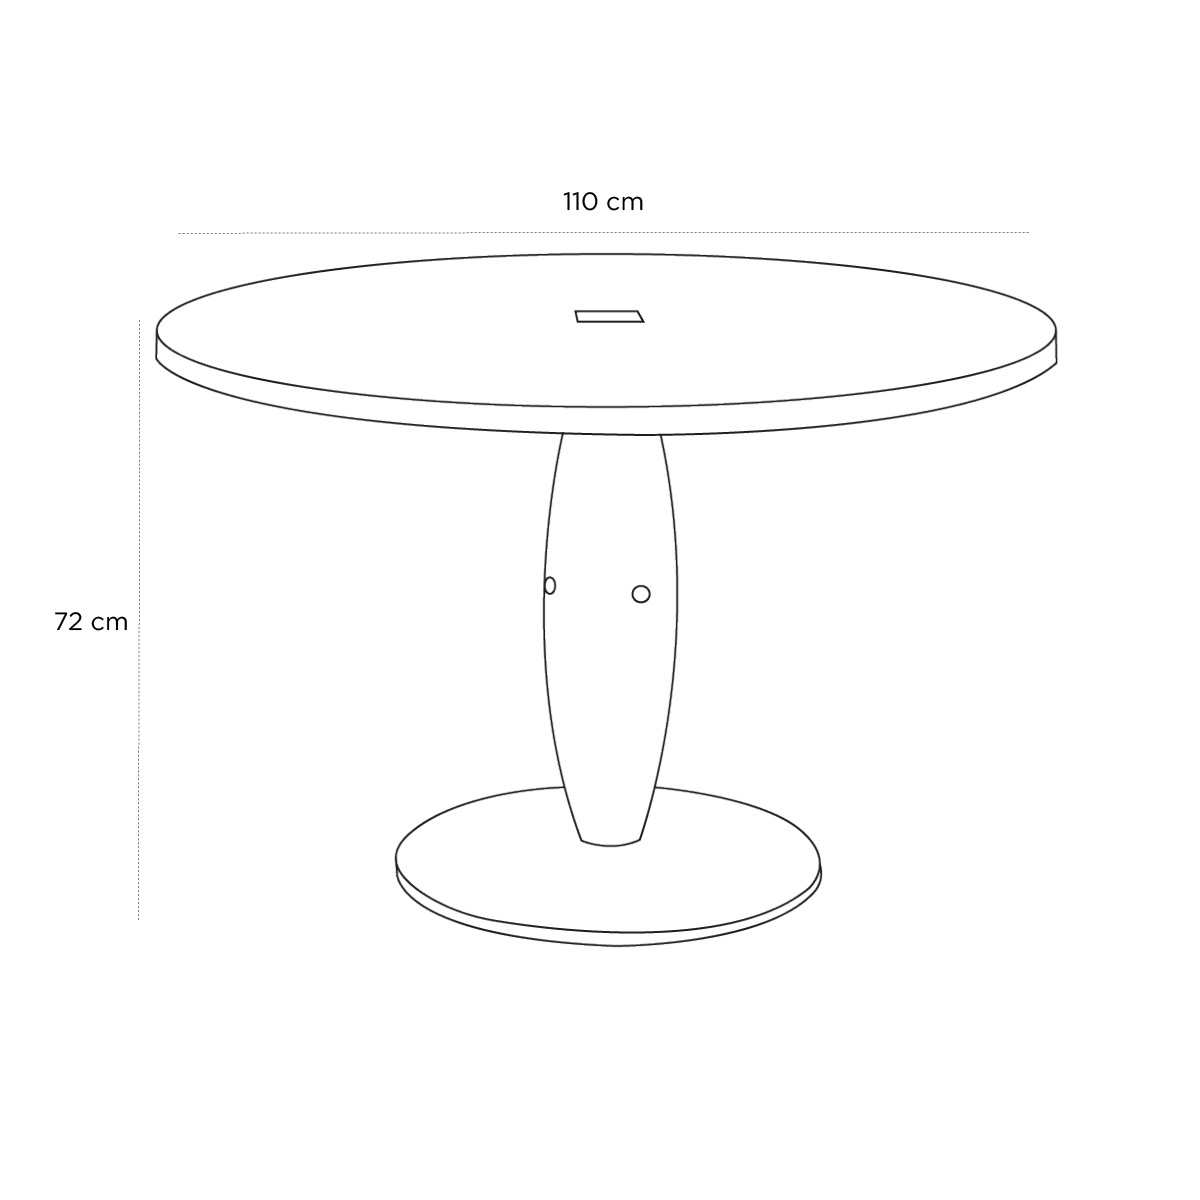 Schéma du produit Table Marly